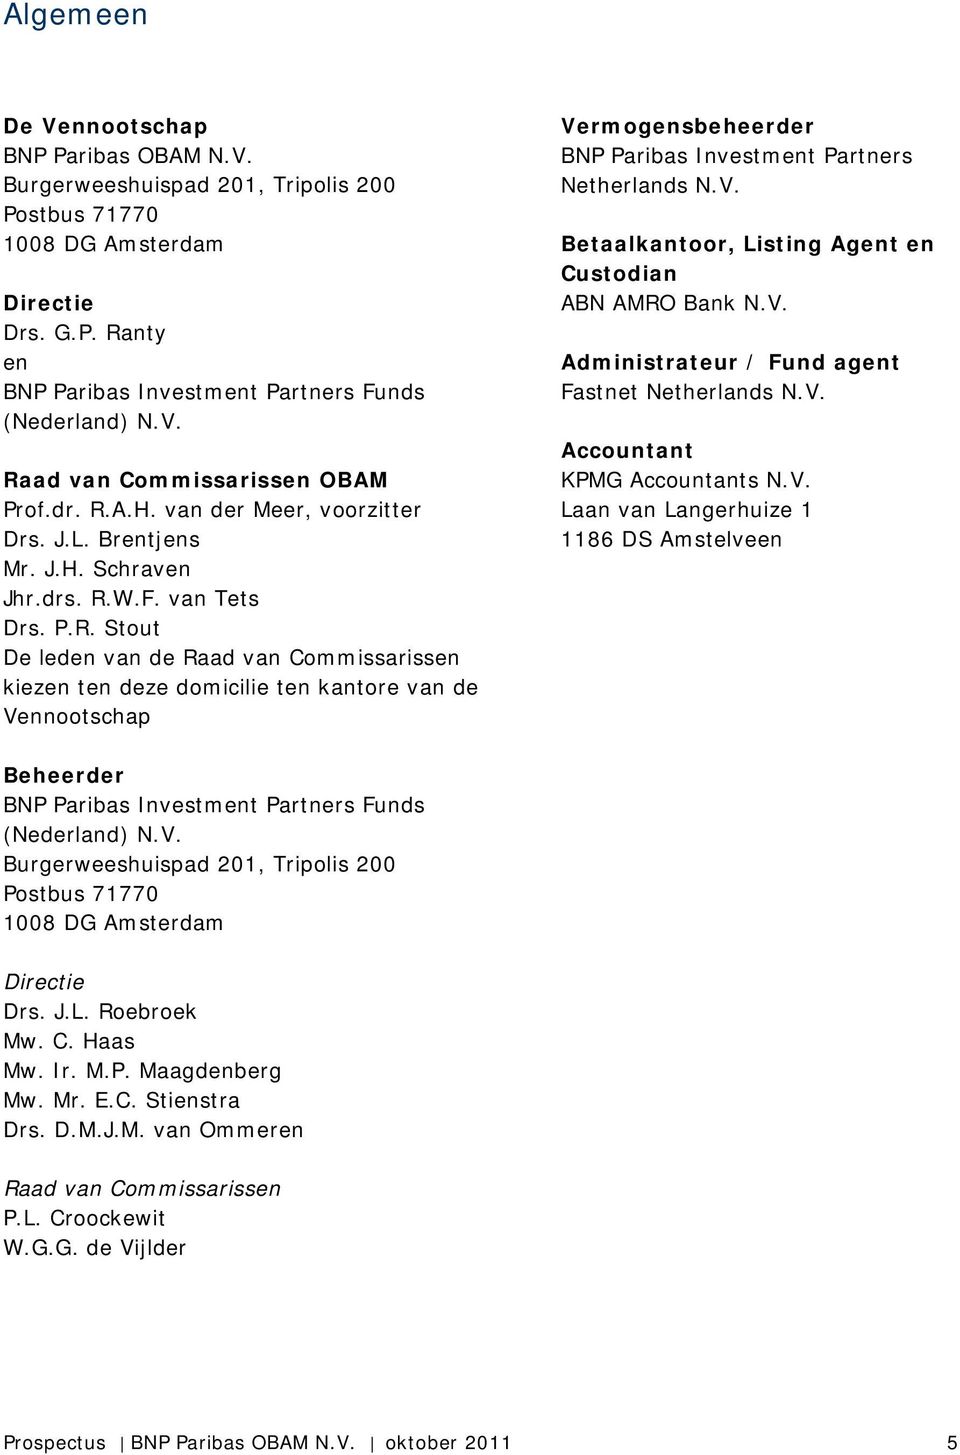 V. Betaalkantoor, Listing Agent en Custodian ABN AMRO Bank N.V. Administrateur / Fund agent Fastnet Netherlands N.V. Accountant KPMG Accountants N.V. Laan van Langerhuize 1 1186 DS Amstelveen Beheerder BNP Paribas Investment Partners Funds (Nederland) N.